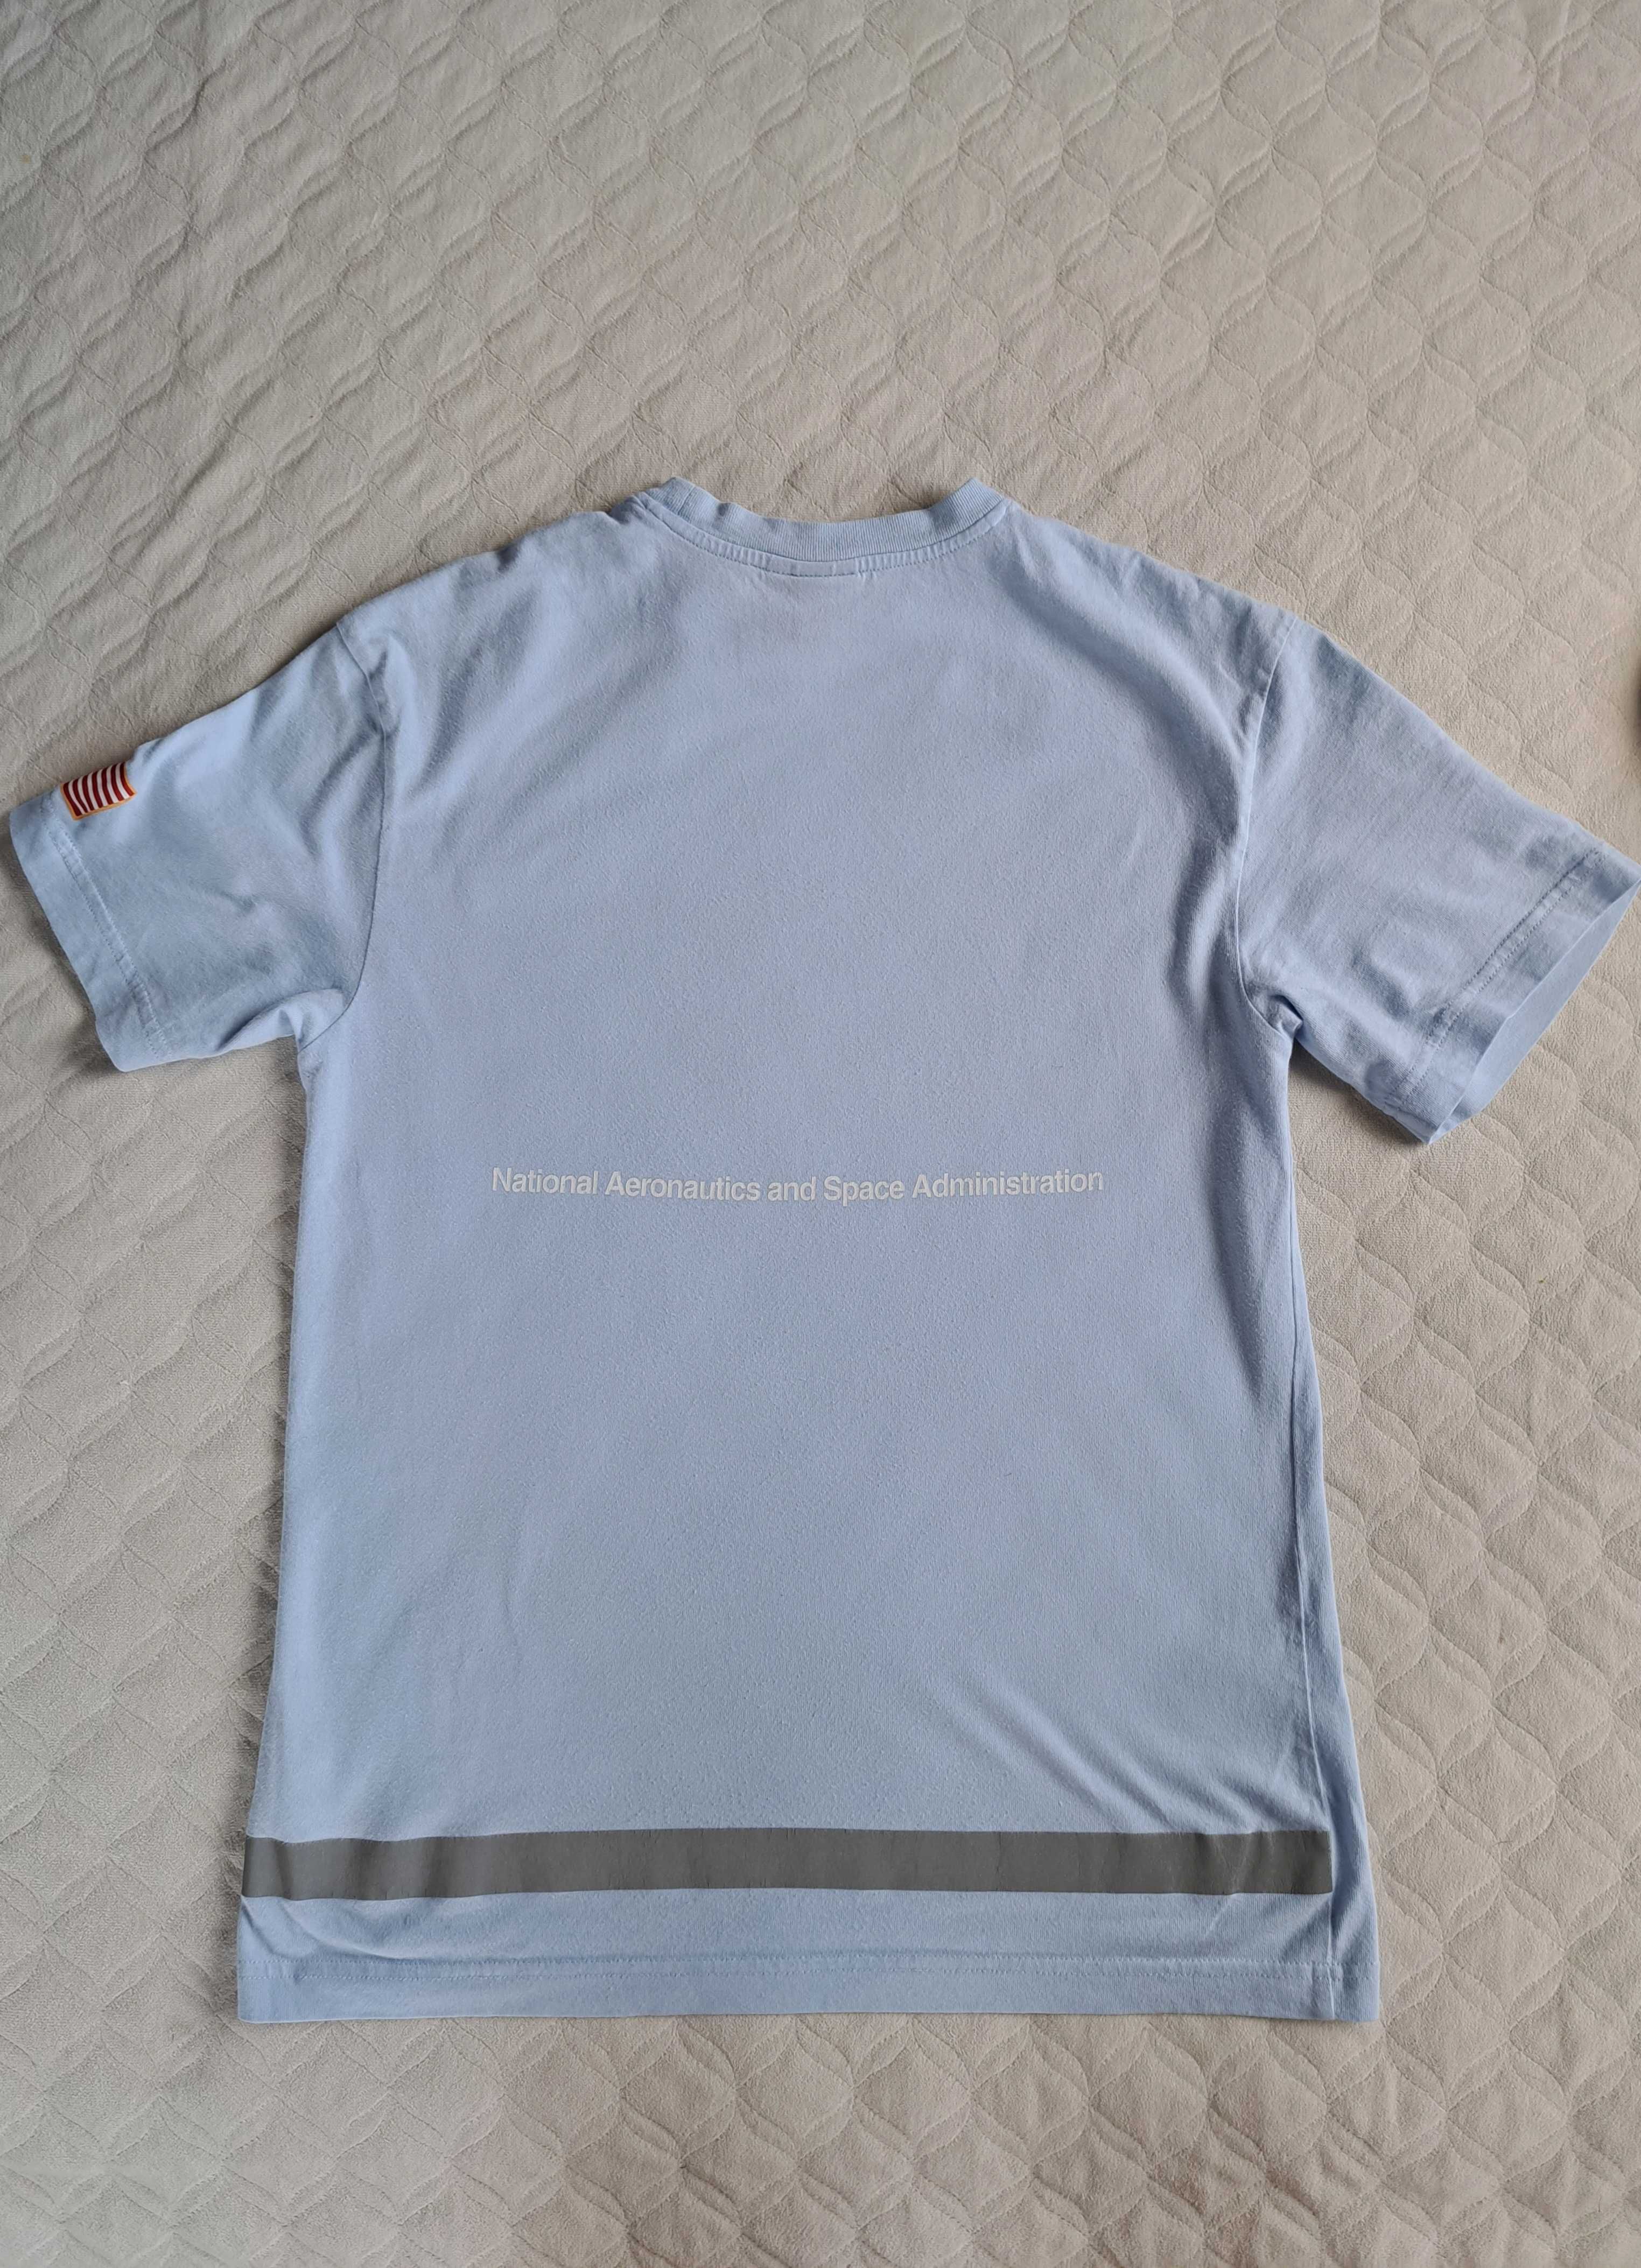 H&M NASA T-shirt XS,  bluzka